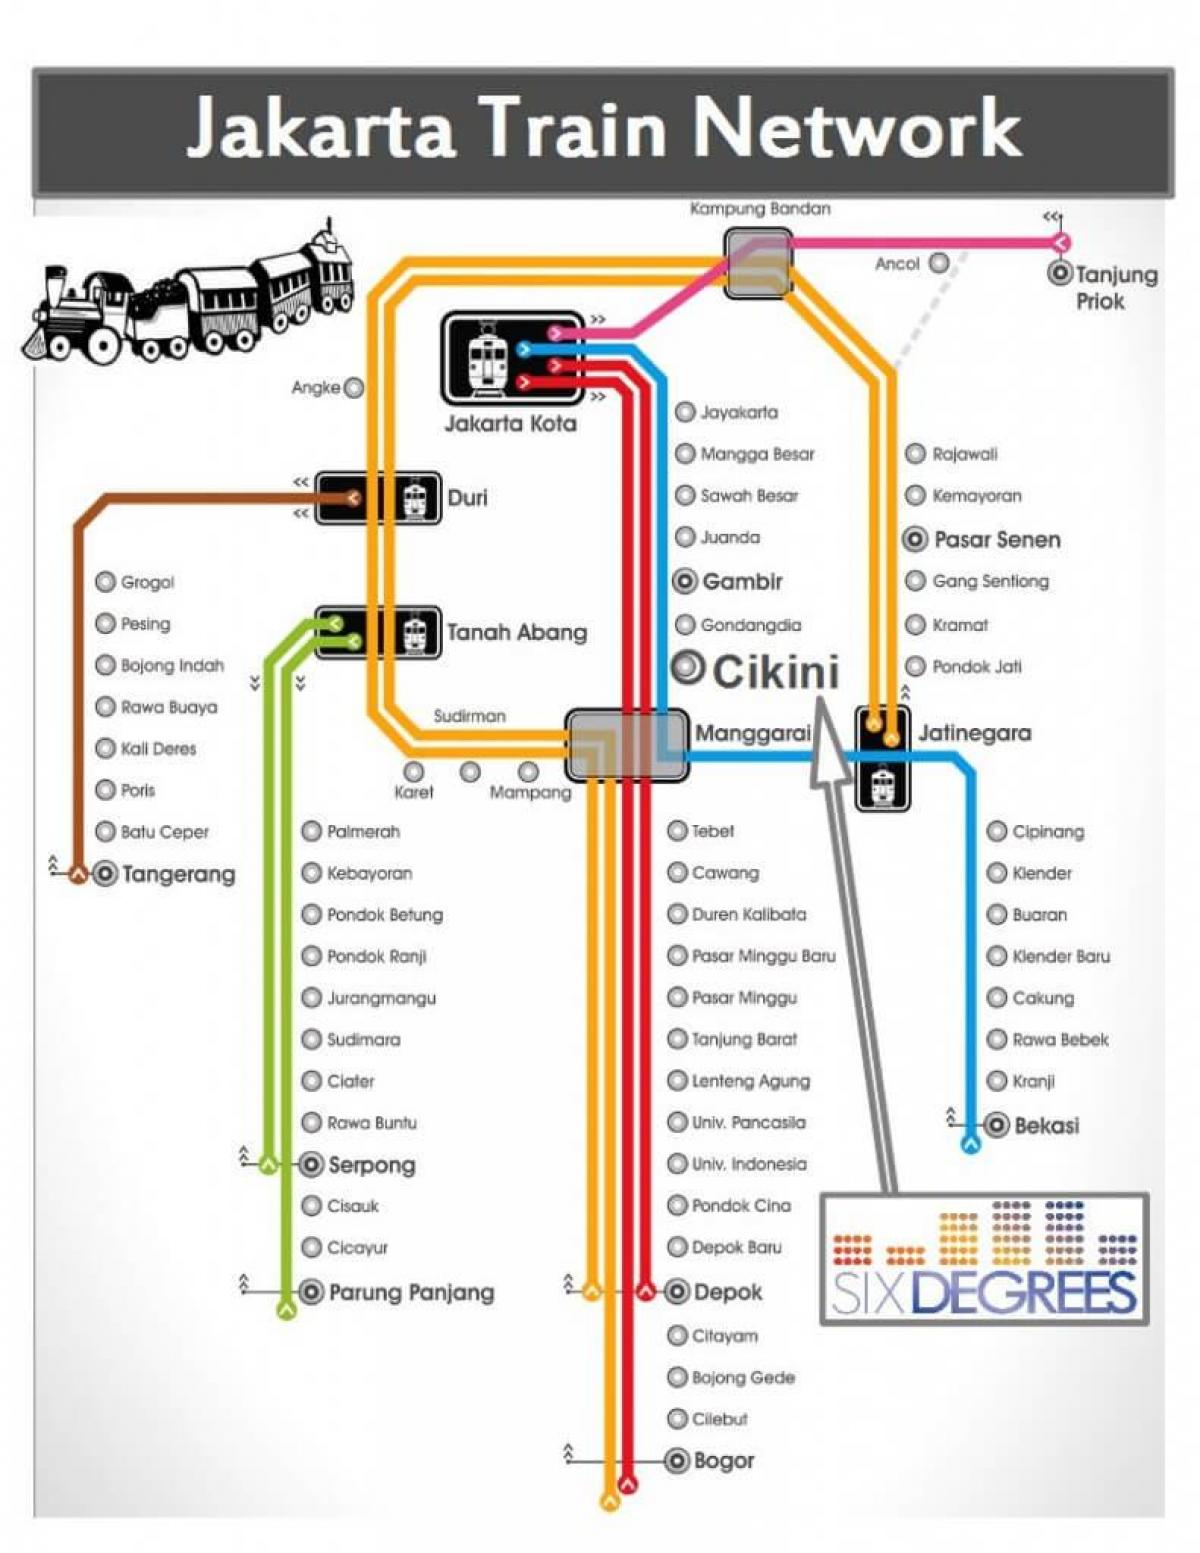 Jacarta mapa ferroviário